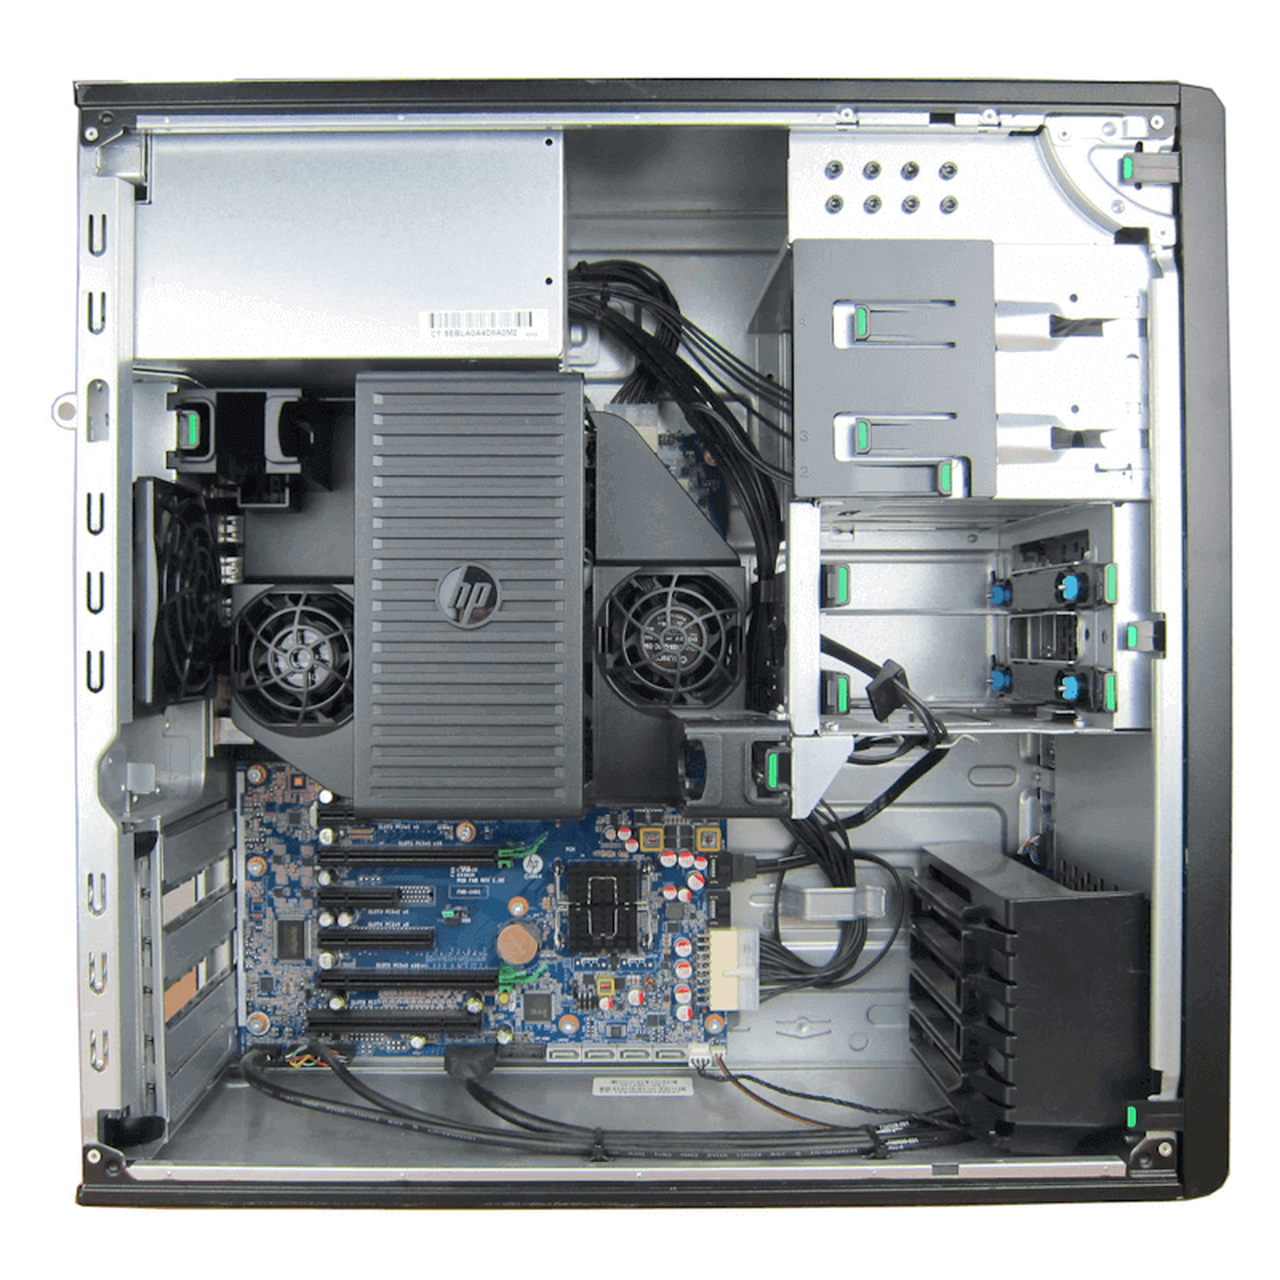 HP Z440 workstation (E5-1603v4/8GB/1TB/M2000)